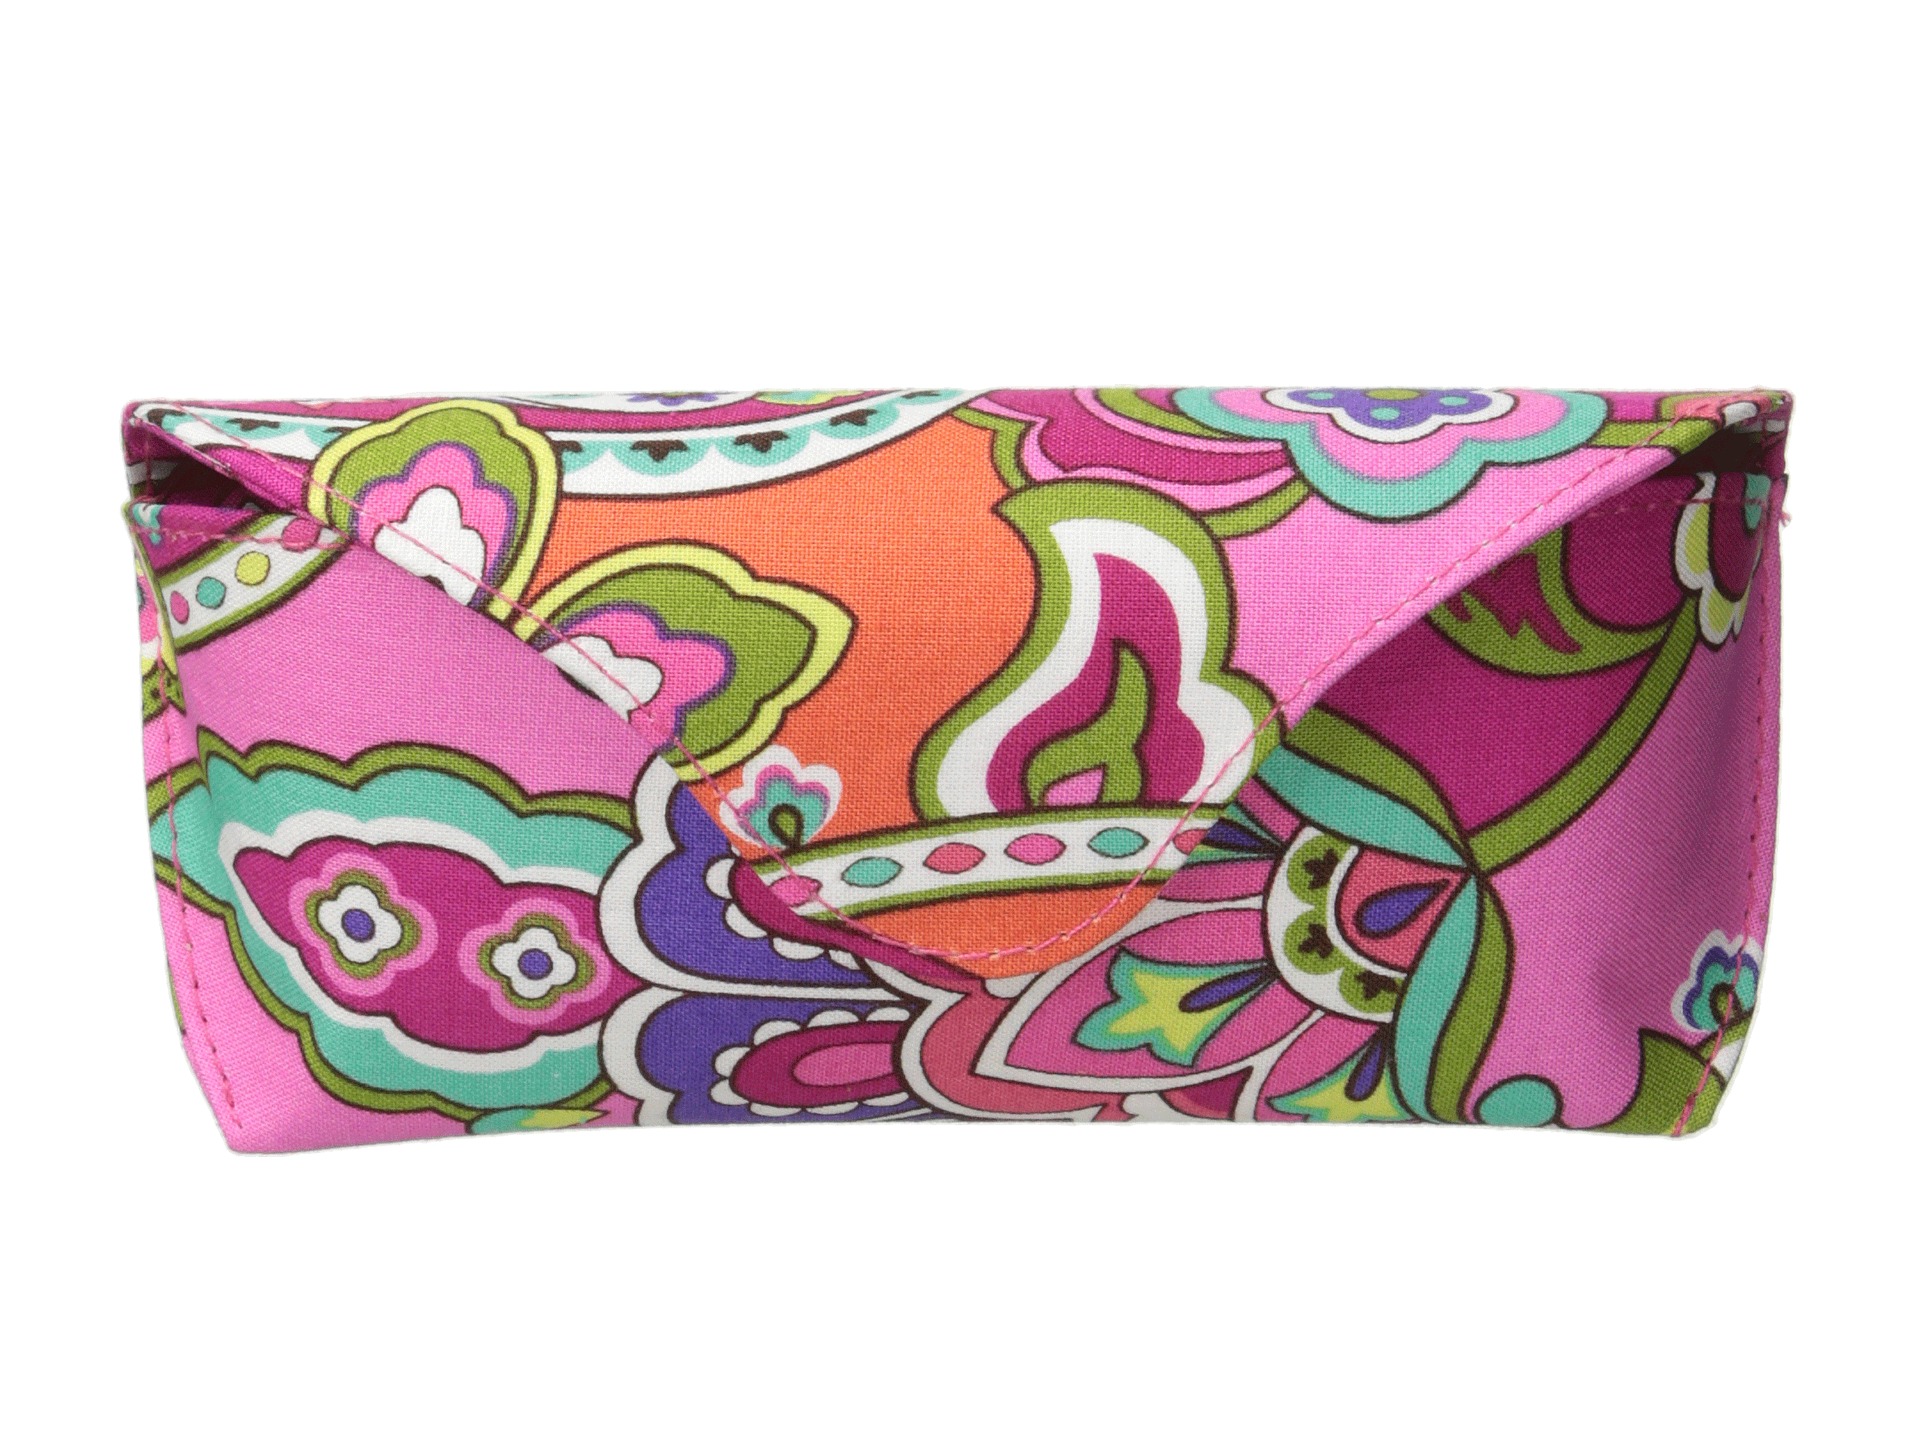 Vera Bradley Eyeglass Case Pink Swirls - Zappos.com Free Shipping BOTH Ways